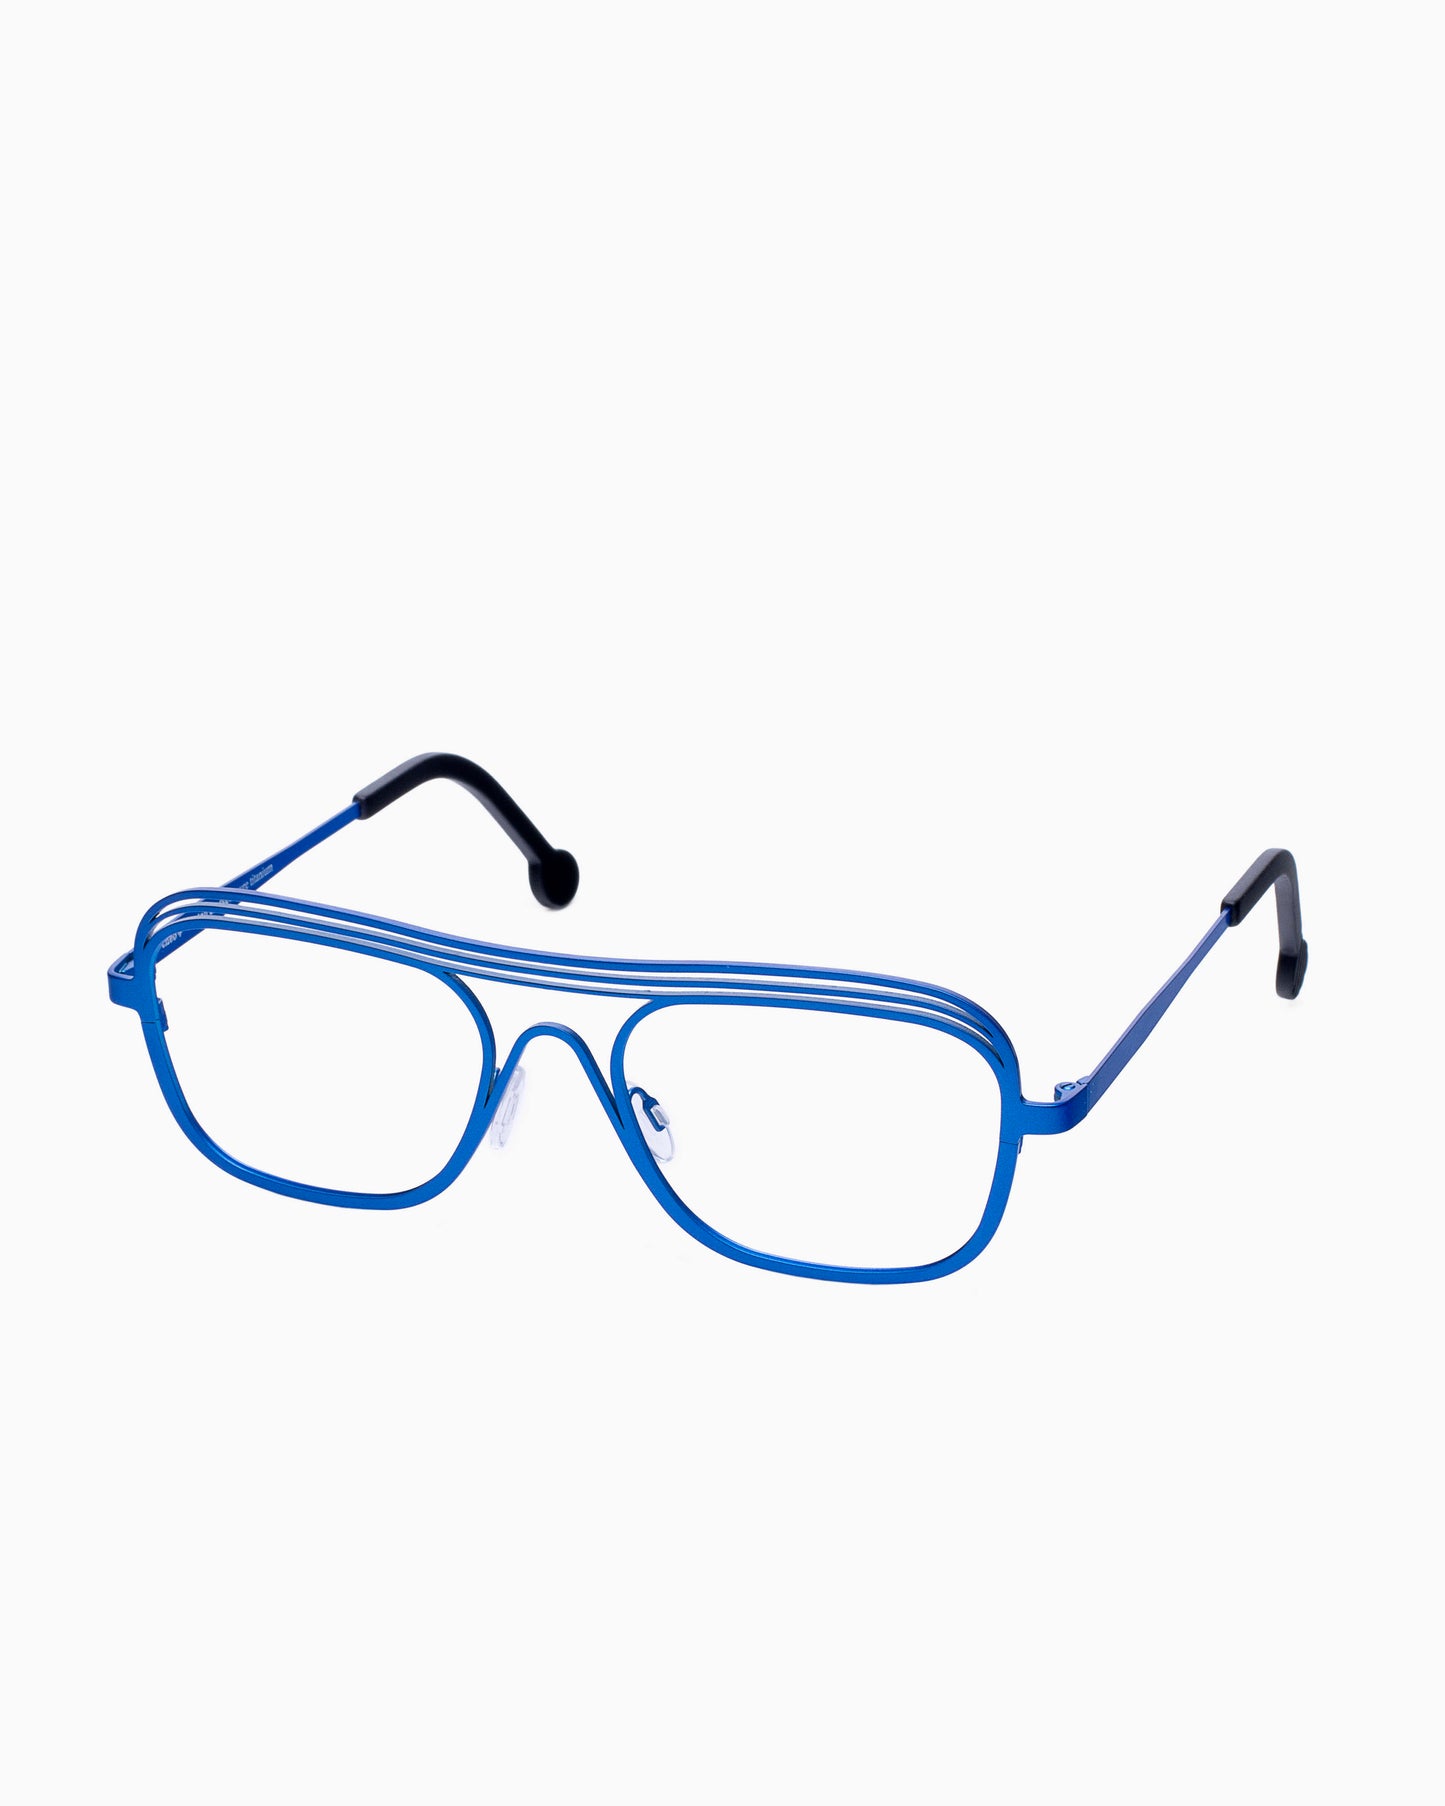 Theo - Exchange - 601 | glasses bar